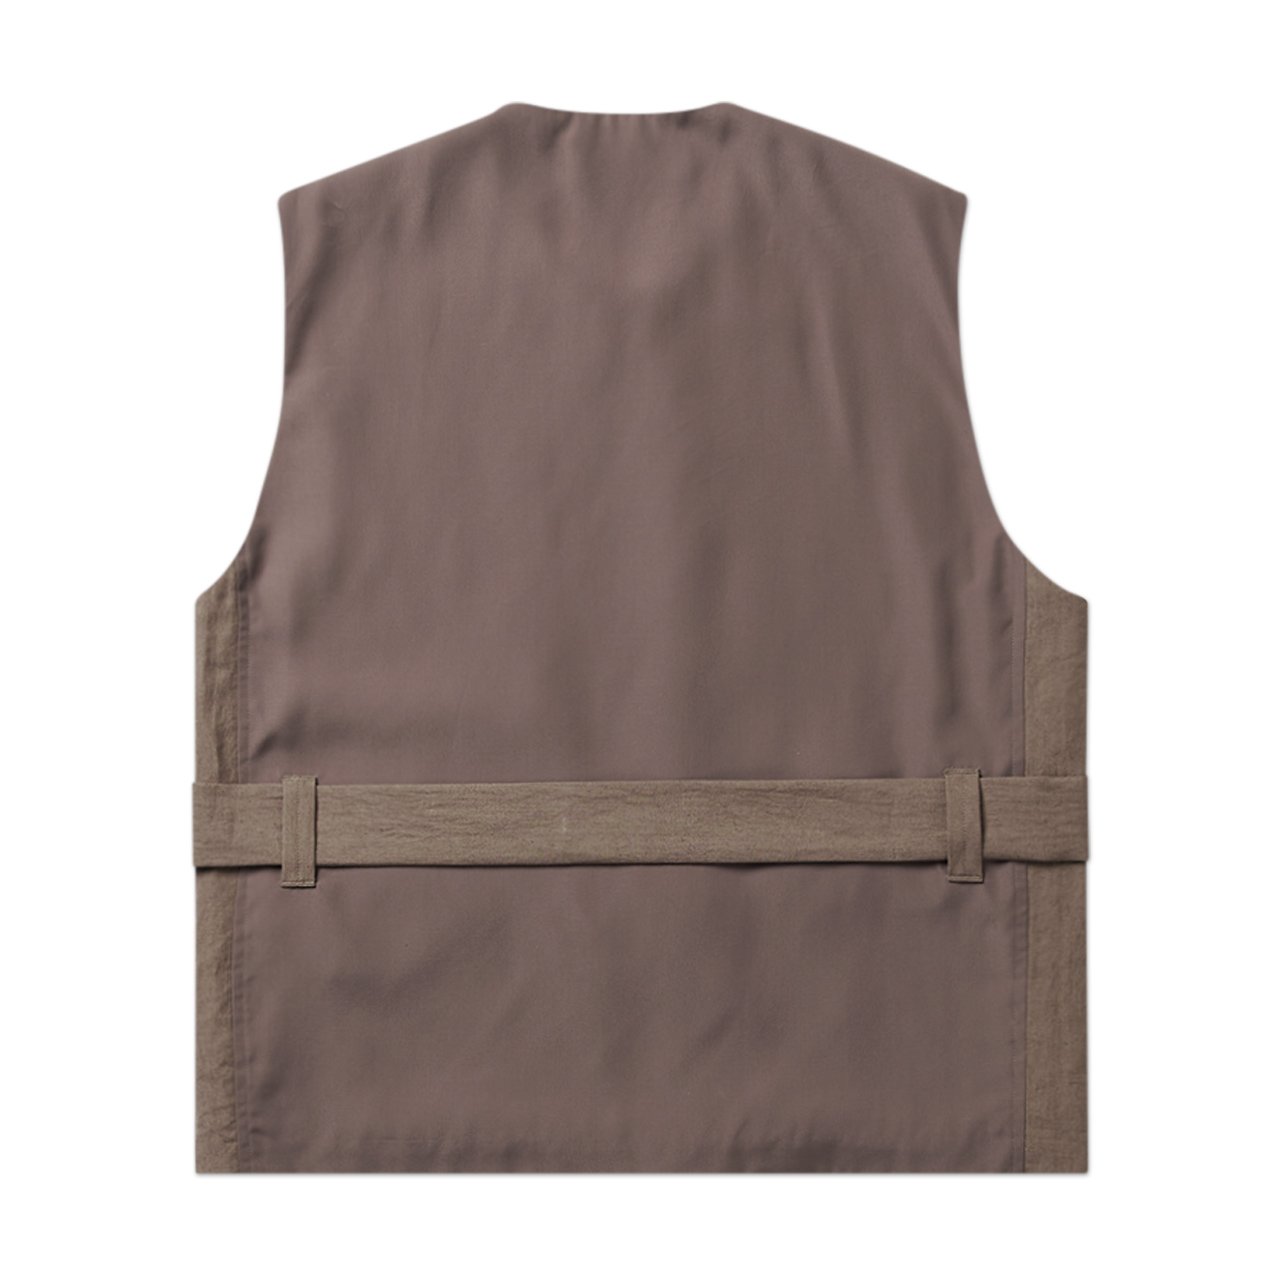 undercover undercover vest (khaki brown)